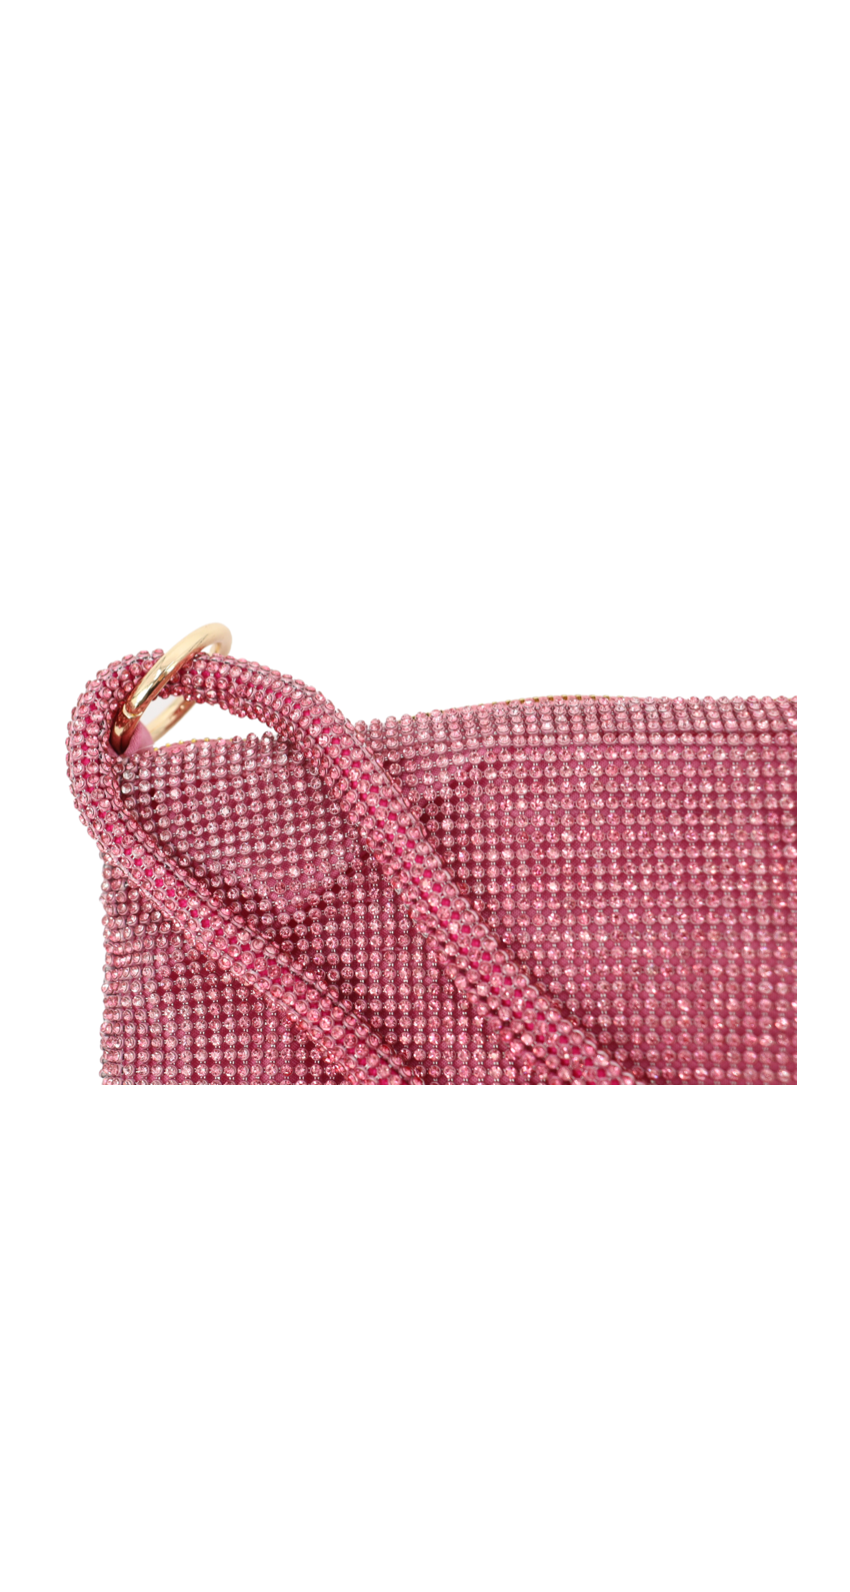 LILIANA UH-Envy Pink Bag